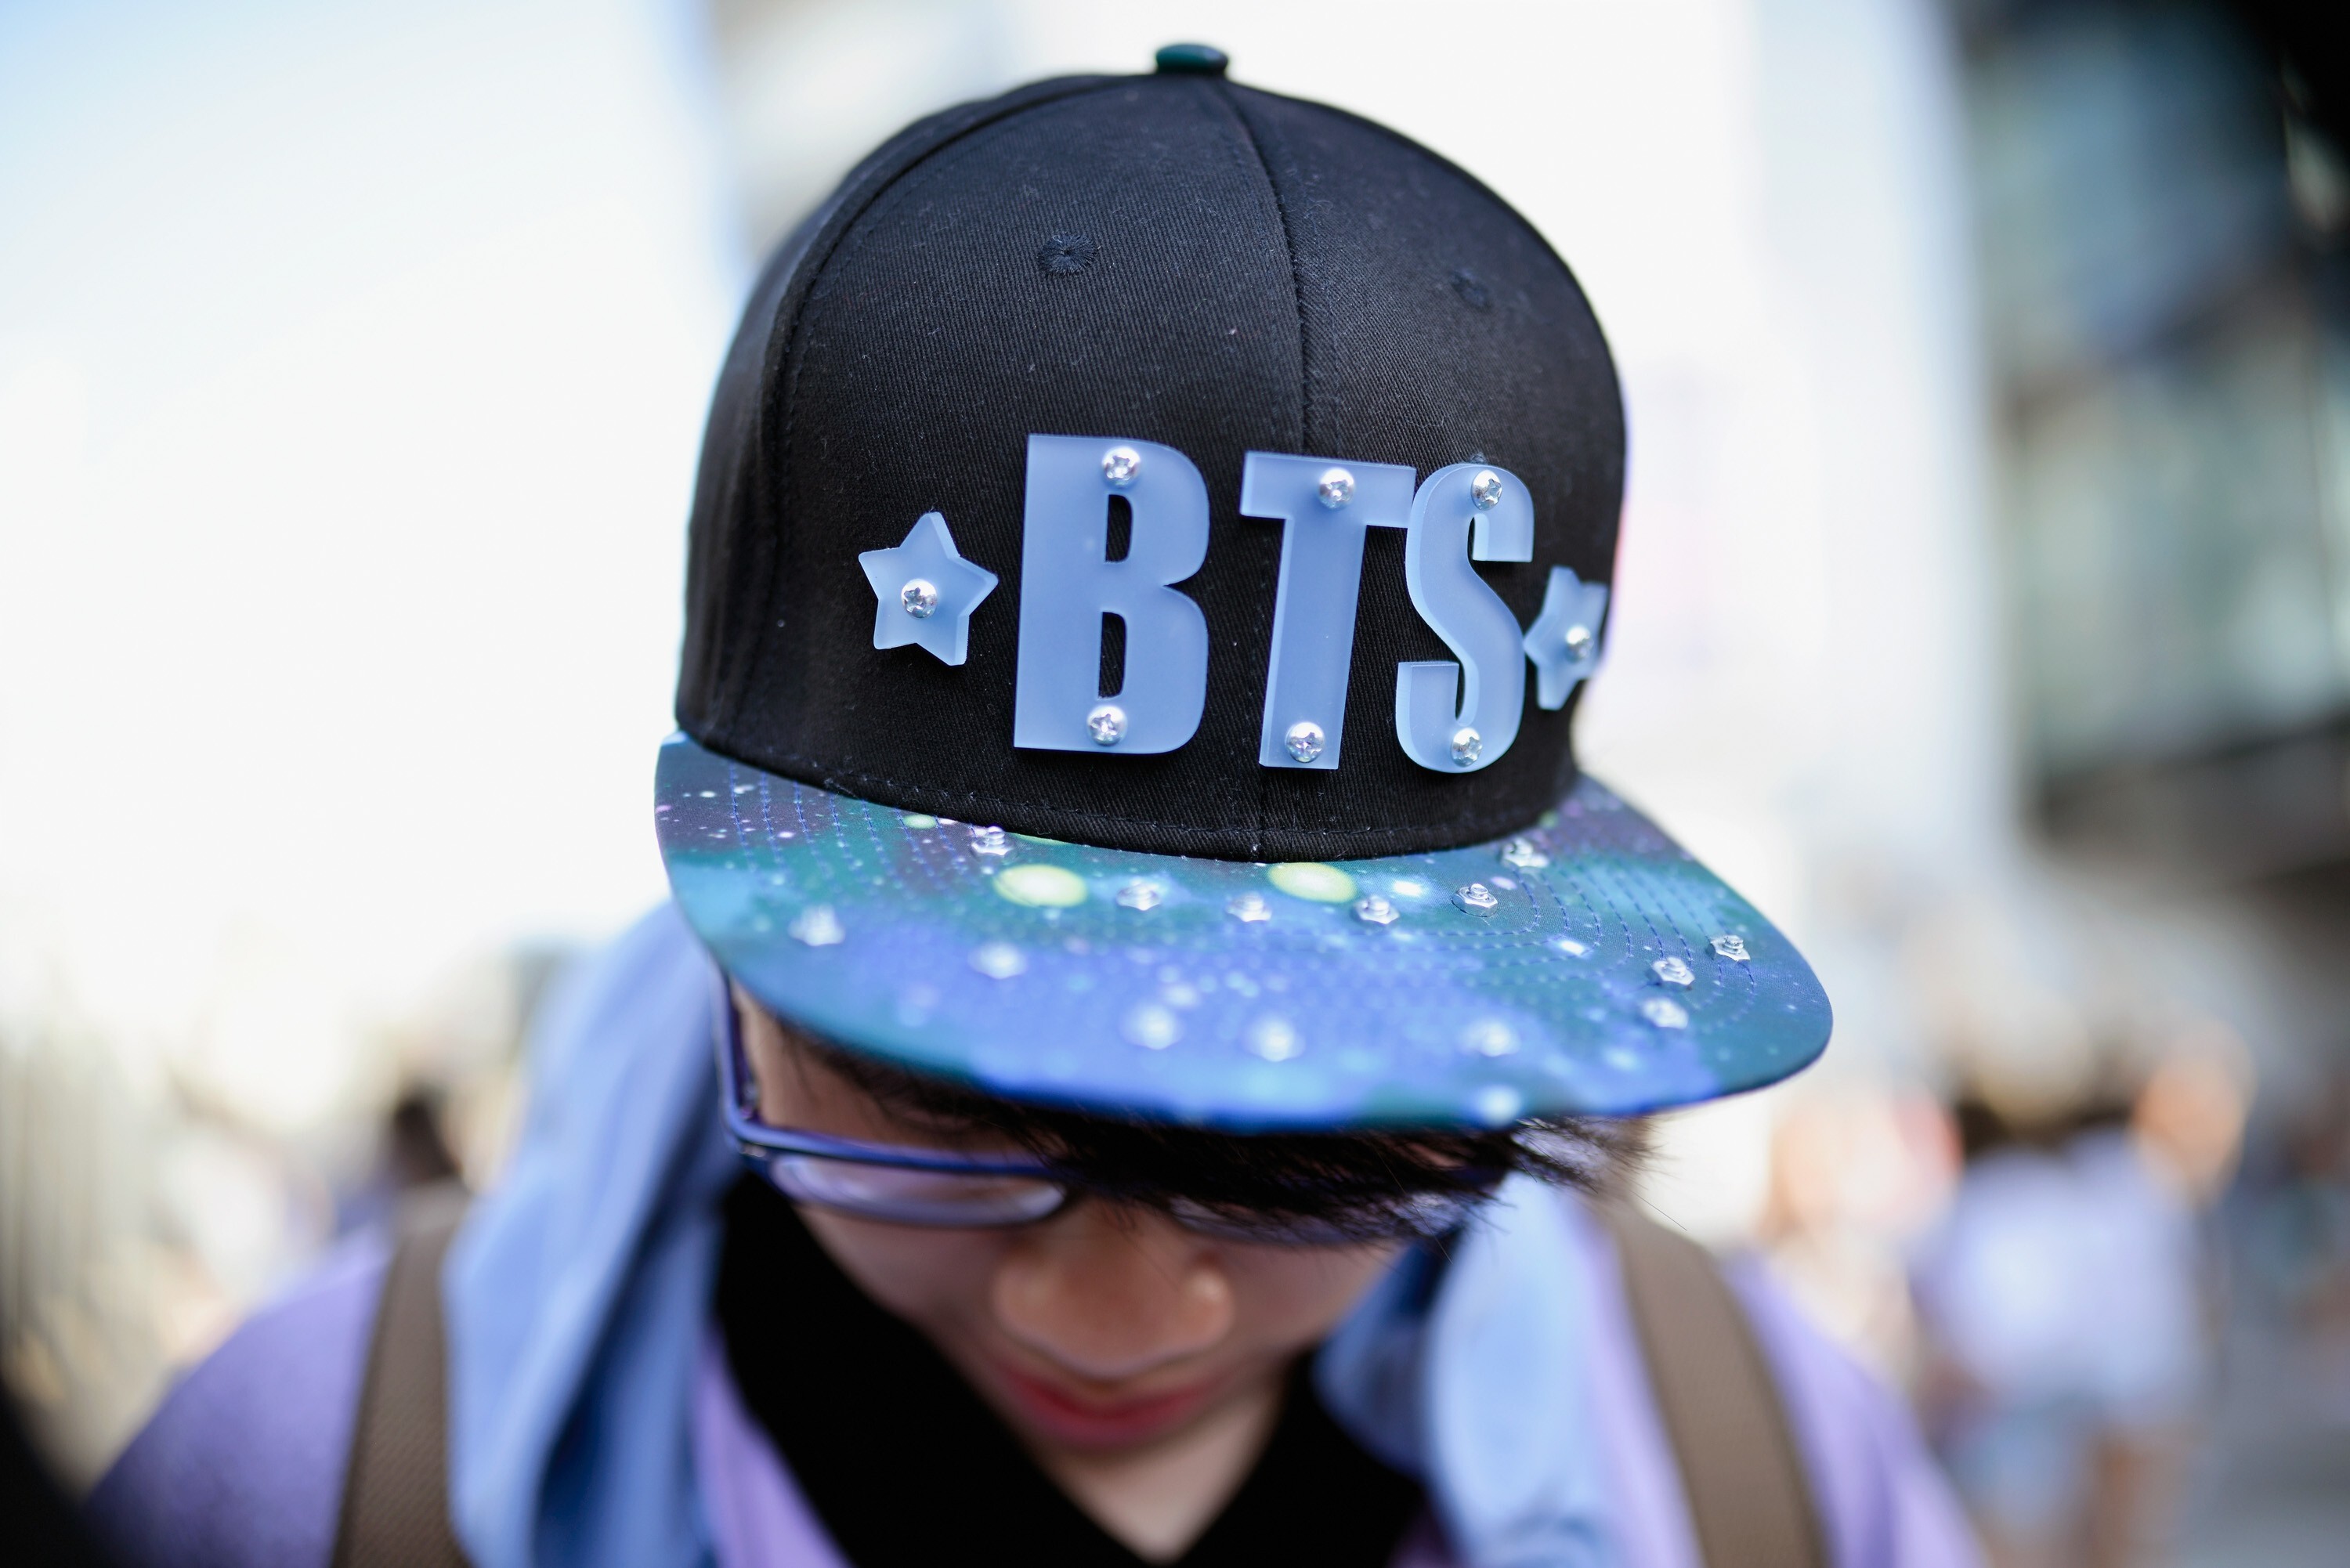 A fan, wearing a BTS hat, awaits a BTS concert. Photo: Getty Images